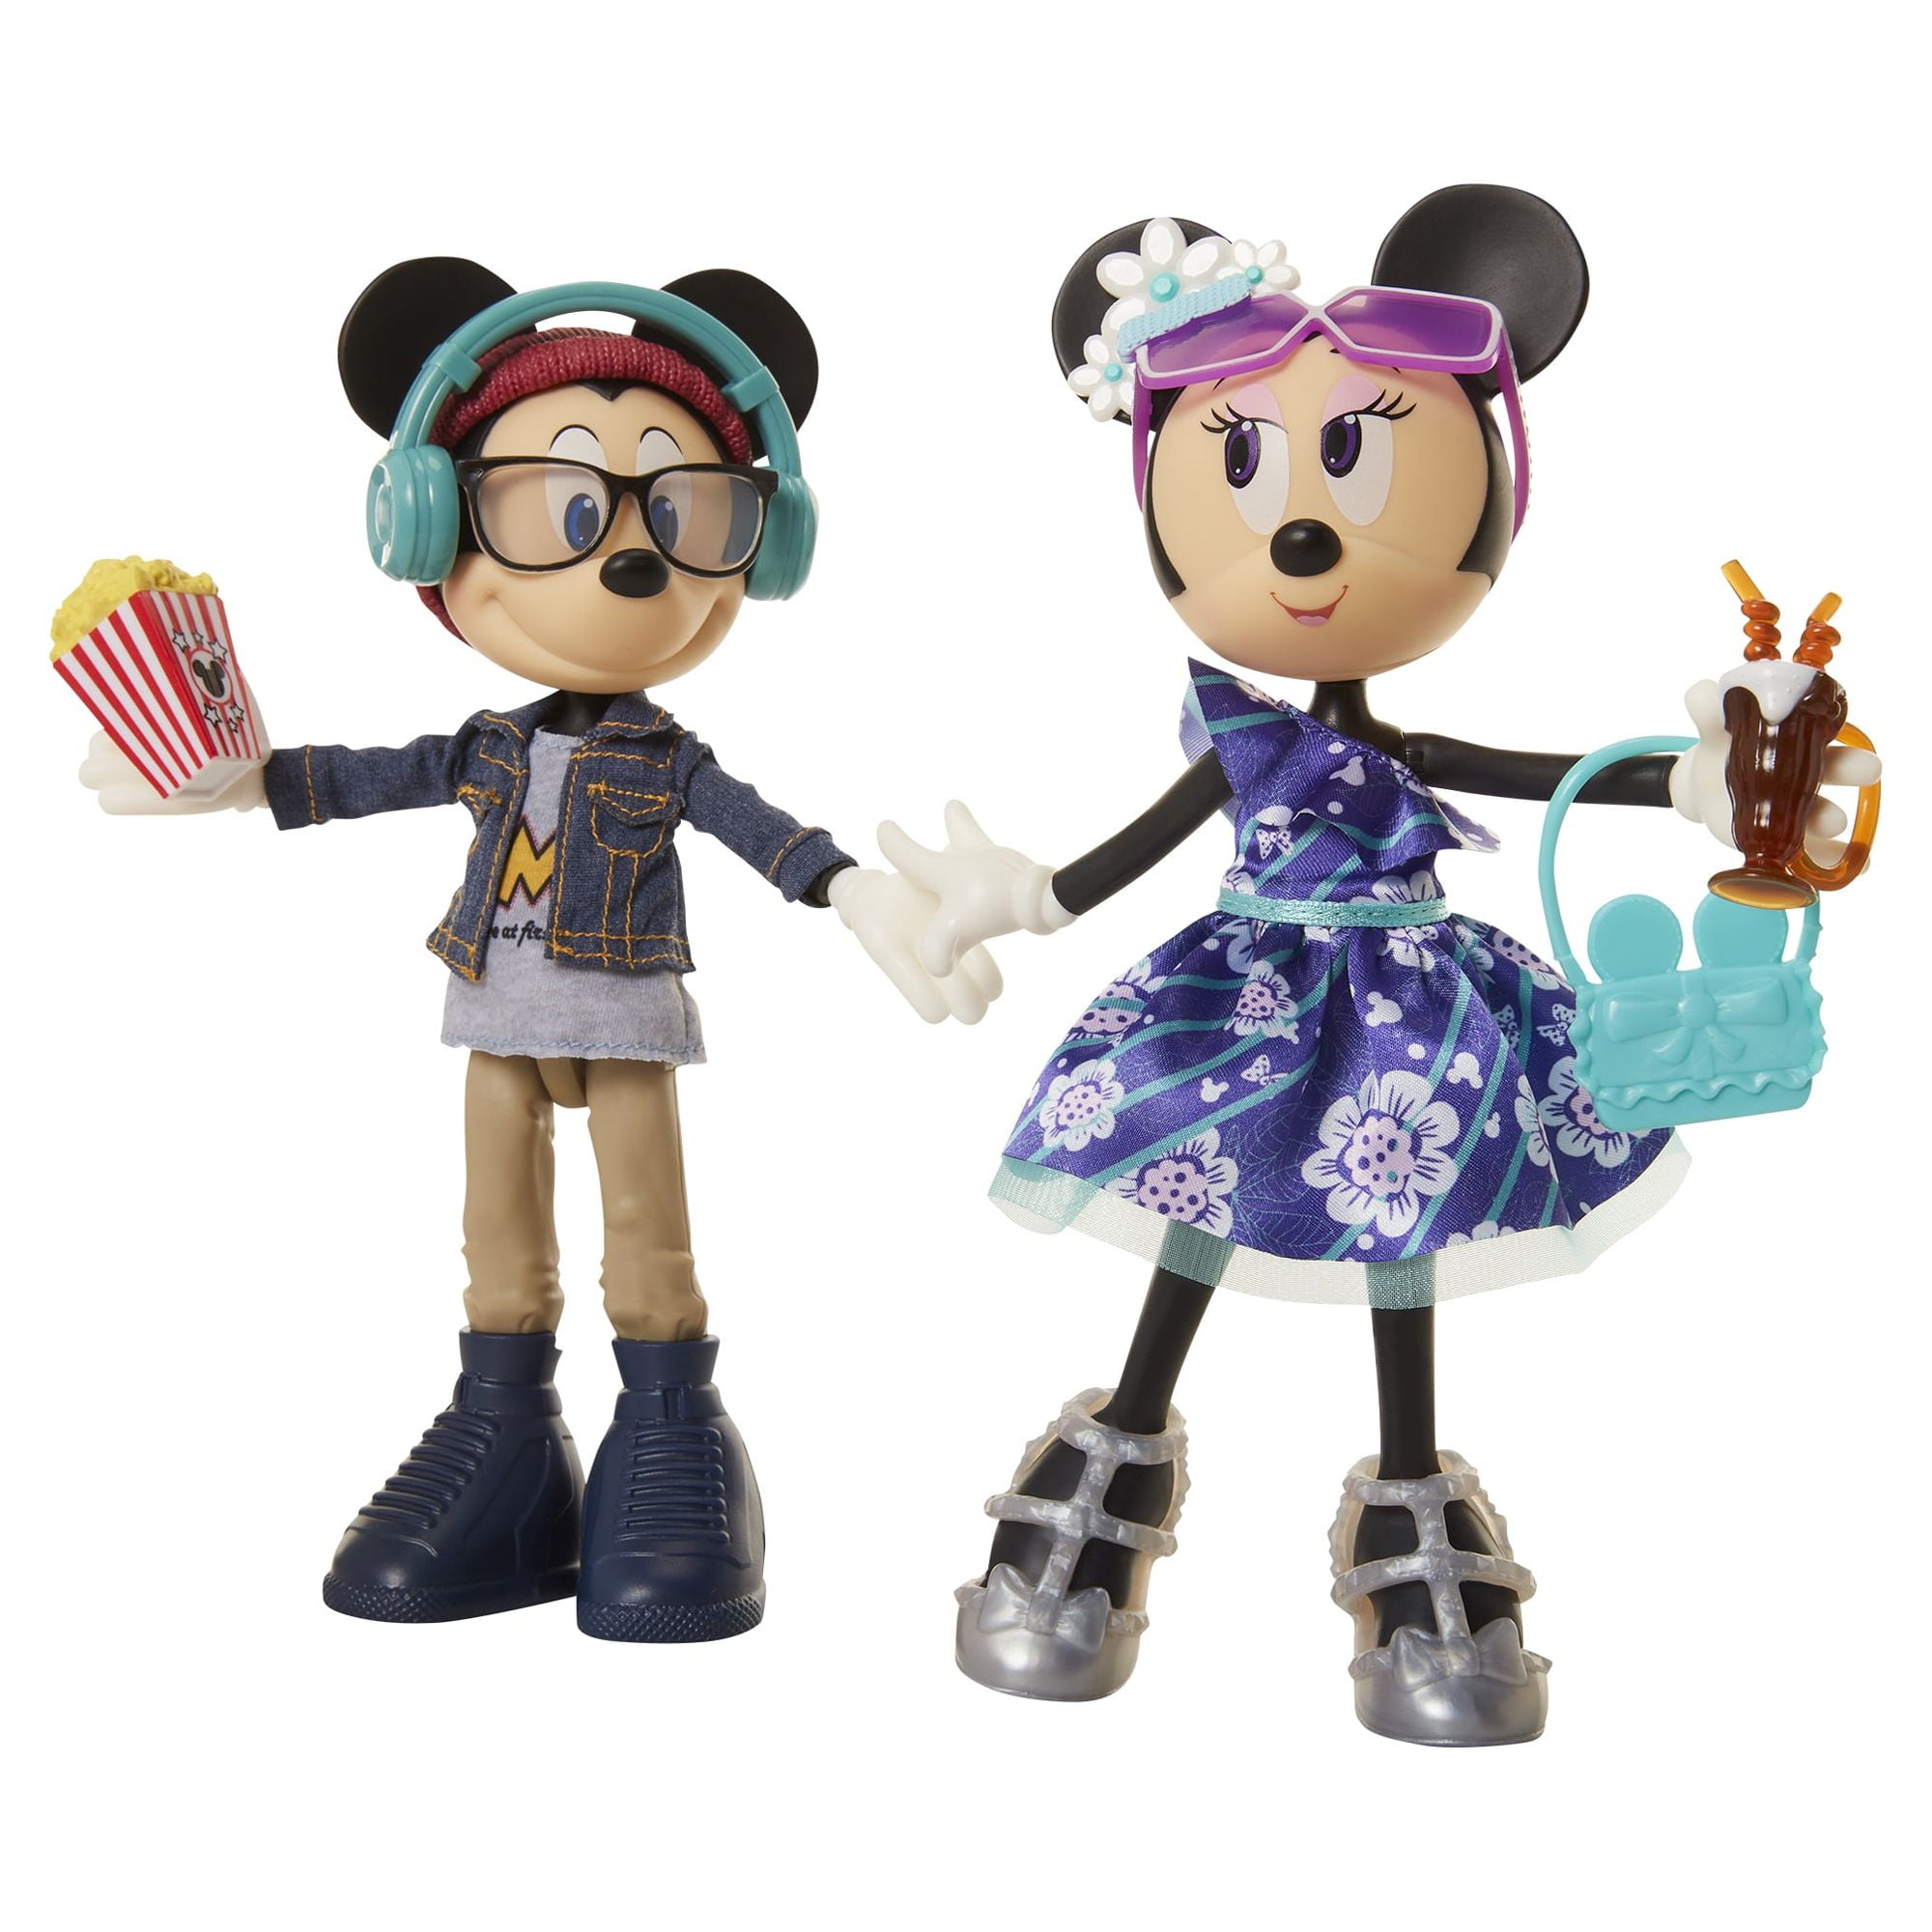 Minnie - Figurine Fashion et Accessoires